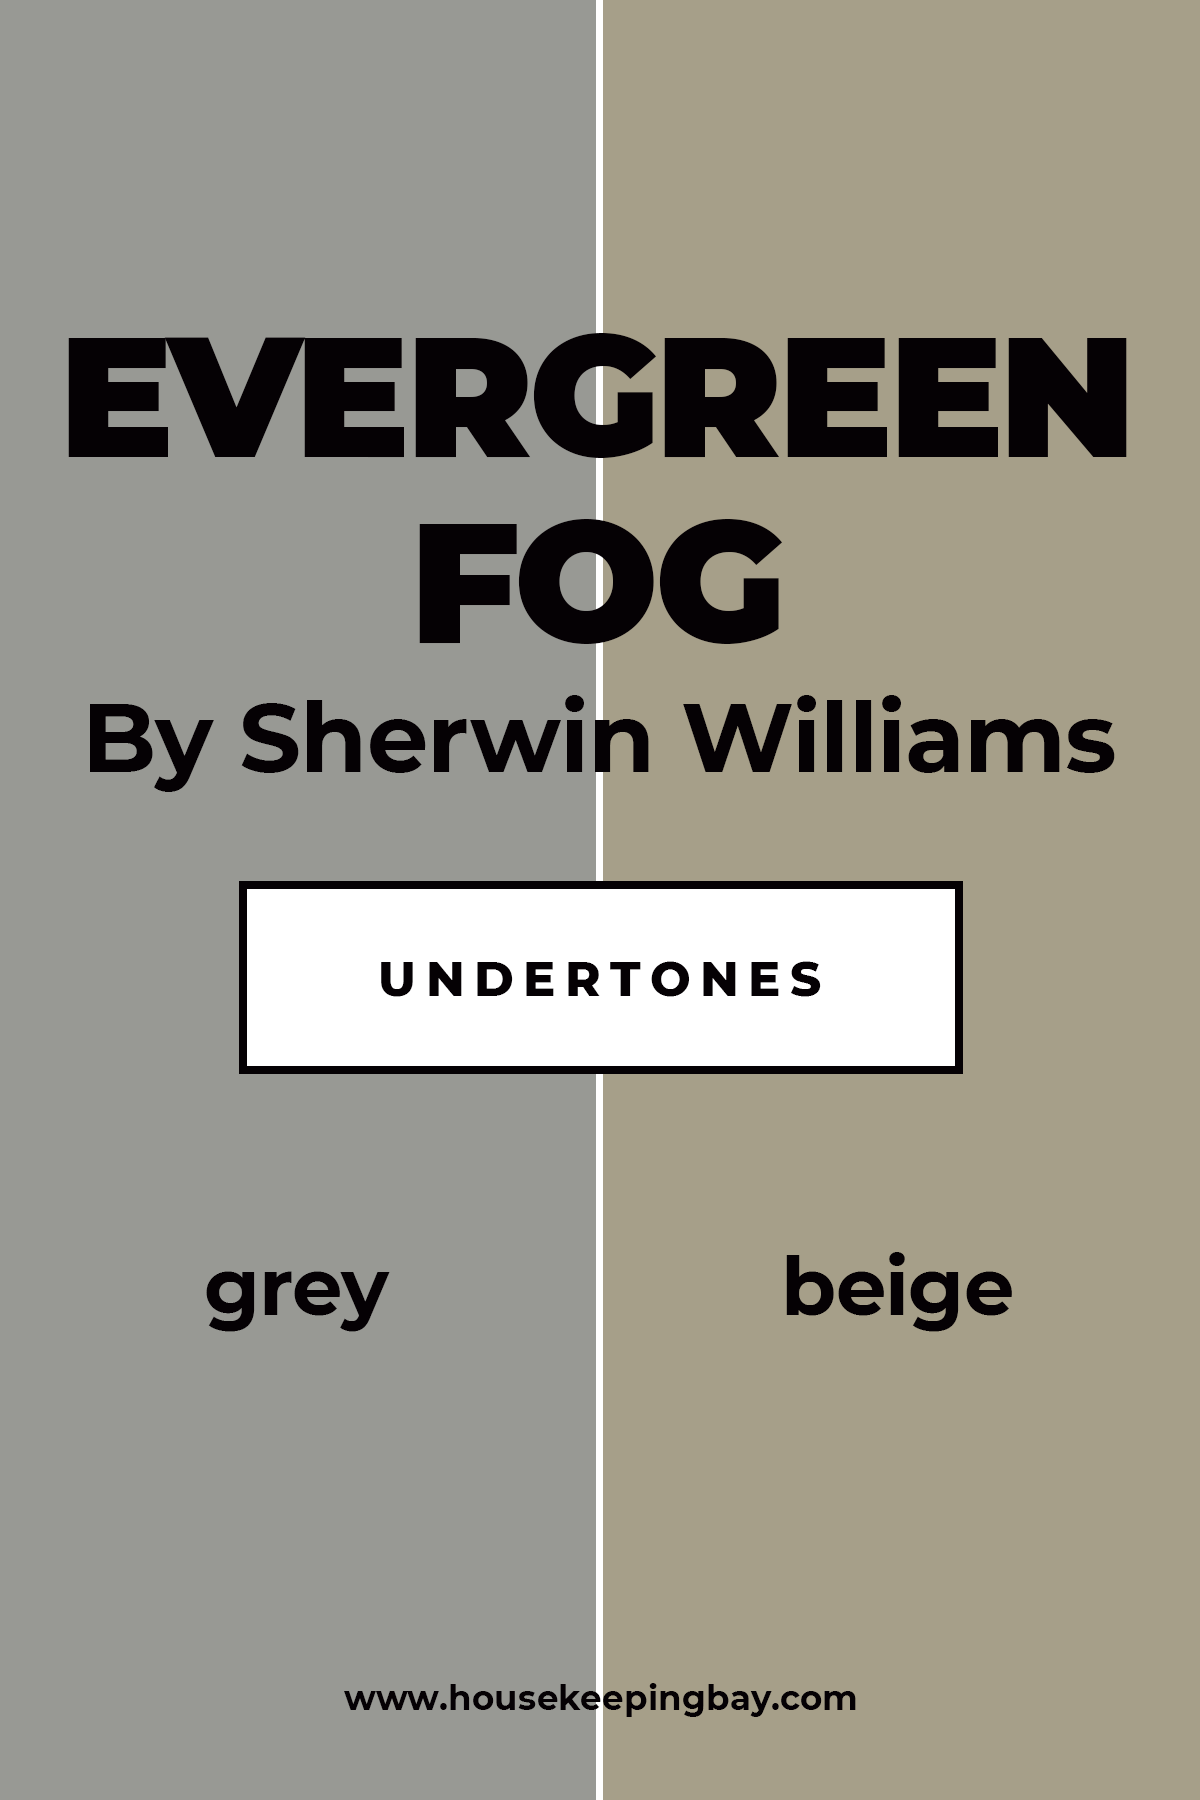 Evergreen Fog Undertones by Sherwin Williams